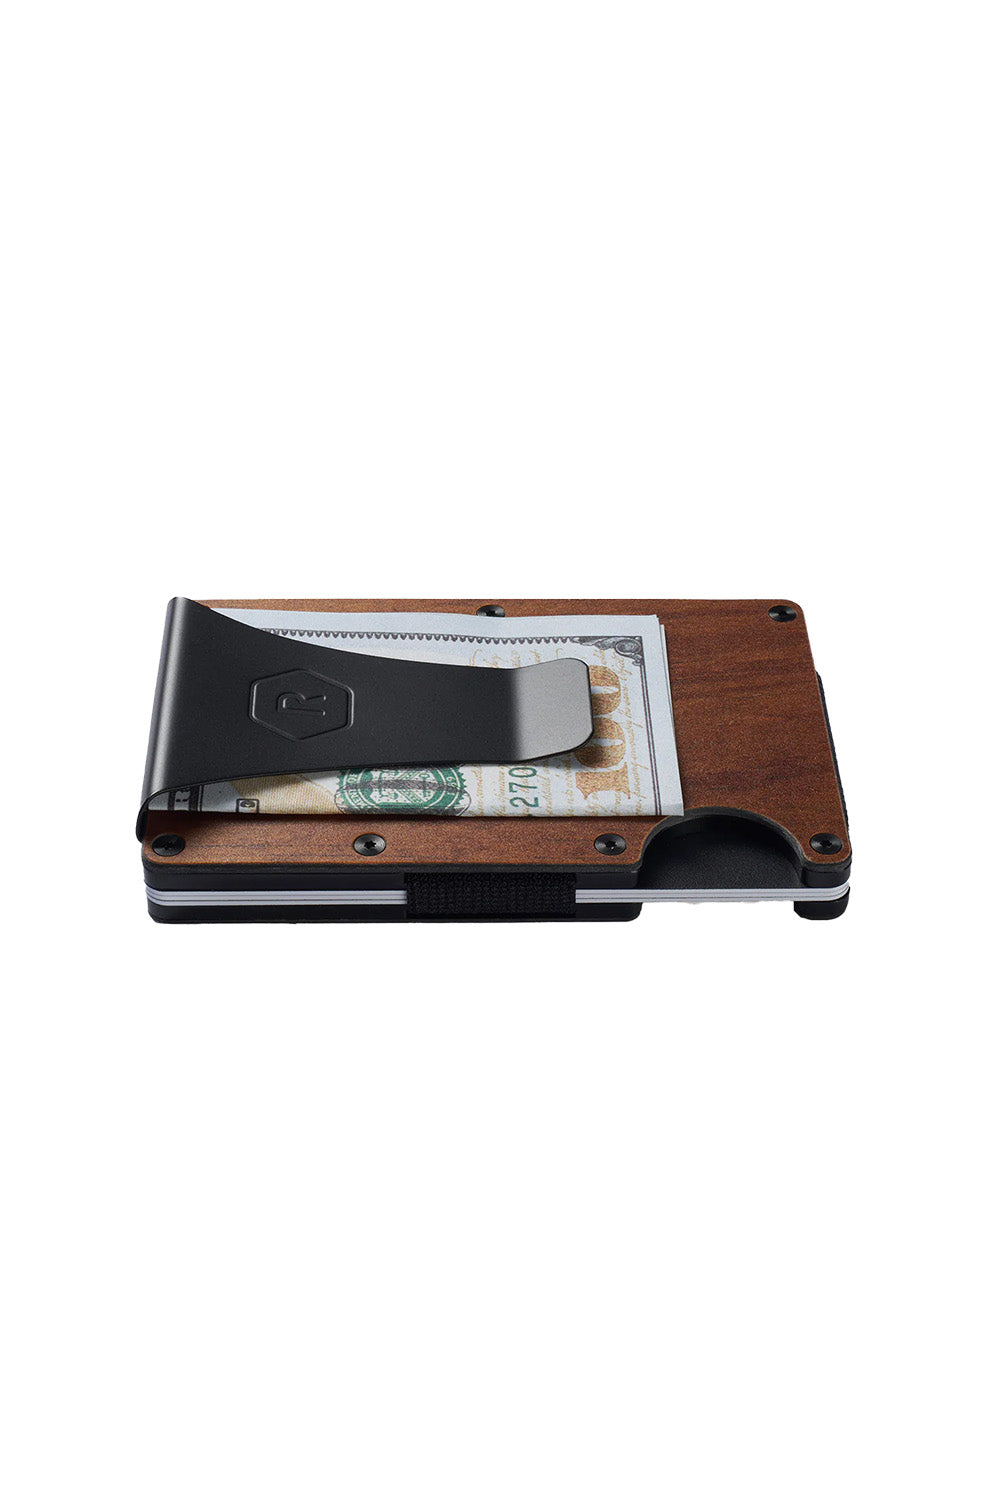 Ridge Wallet - Aluminum - Money Clip - Mopane Wood - Side